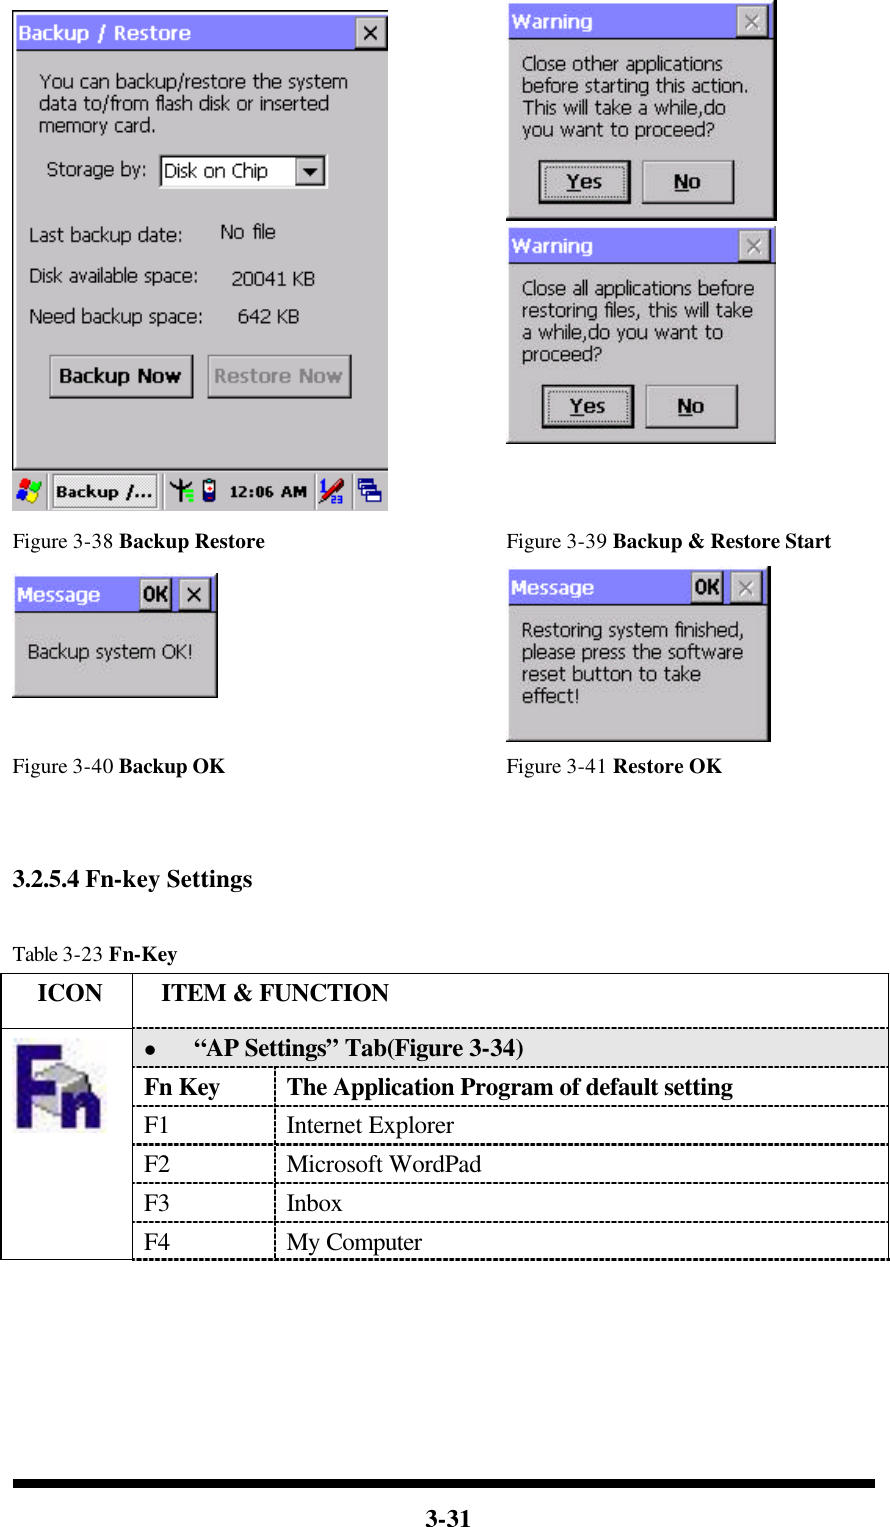  3-31    Figure 3-38 Backup Restore Figure 3-39 Backup &amp; Restore Start   Figure 3-40 Backup OK Figure 3-41 Restore OK   3.2.5.4 Fn-key Settings  Table 3-23 Fn-Key   ICON  ITEM &amp; FUNCTION l “AP Settings” Tab(Figure 3-34) Fn Key The Application Program of default setting F1 Internet Explorer F2 Microsoft WordPad F3 Inbox  F4 My Computer 